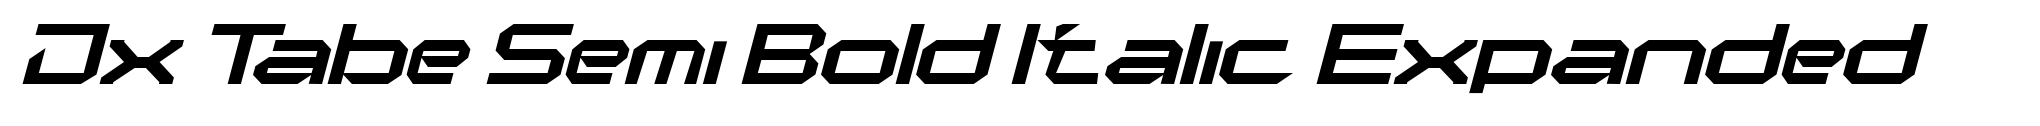 Jx Tabe Semi Bold Italic Expanded image